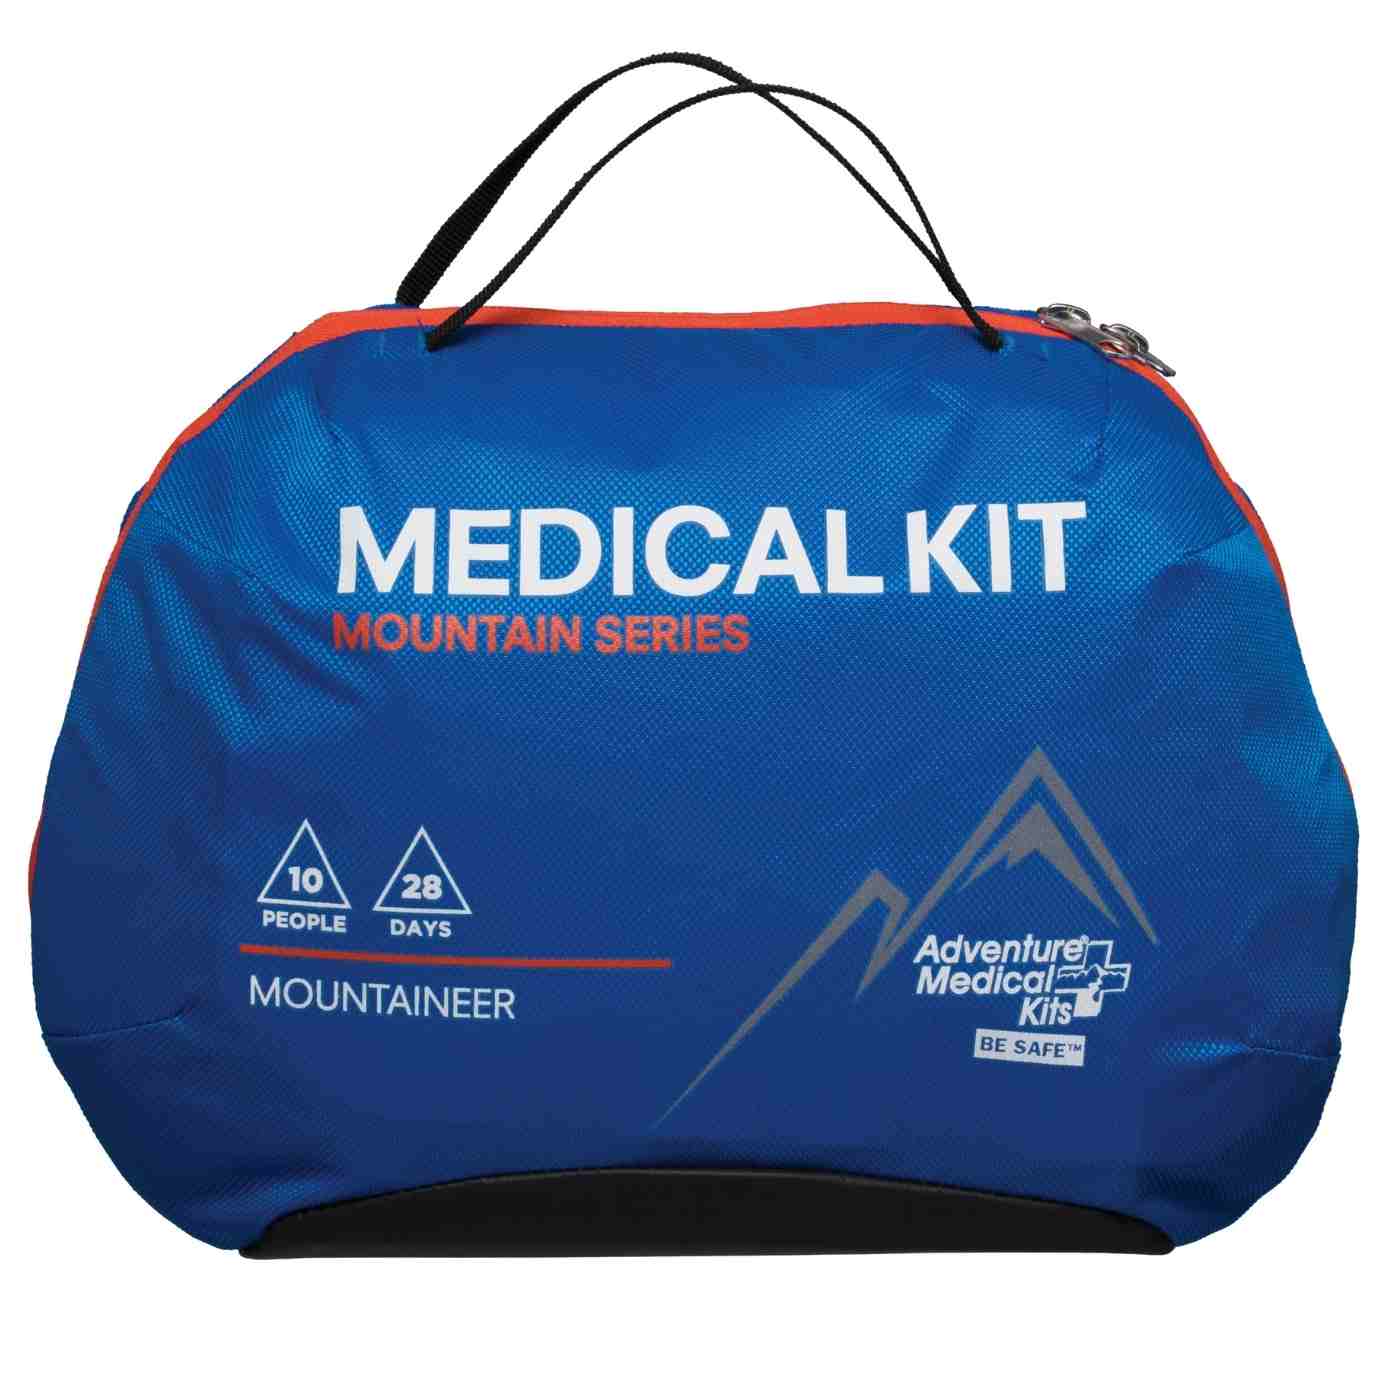 Mountain Series Medical Kit - Mountaineer front